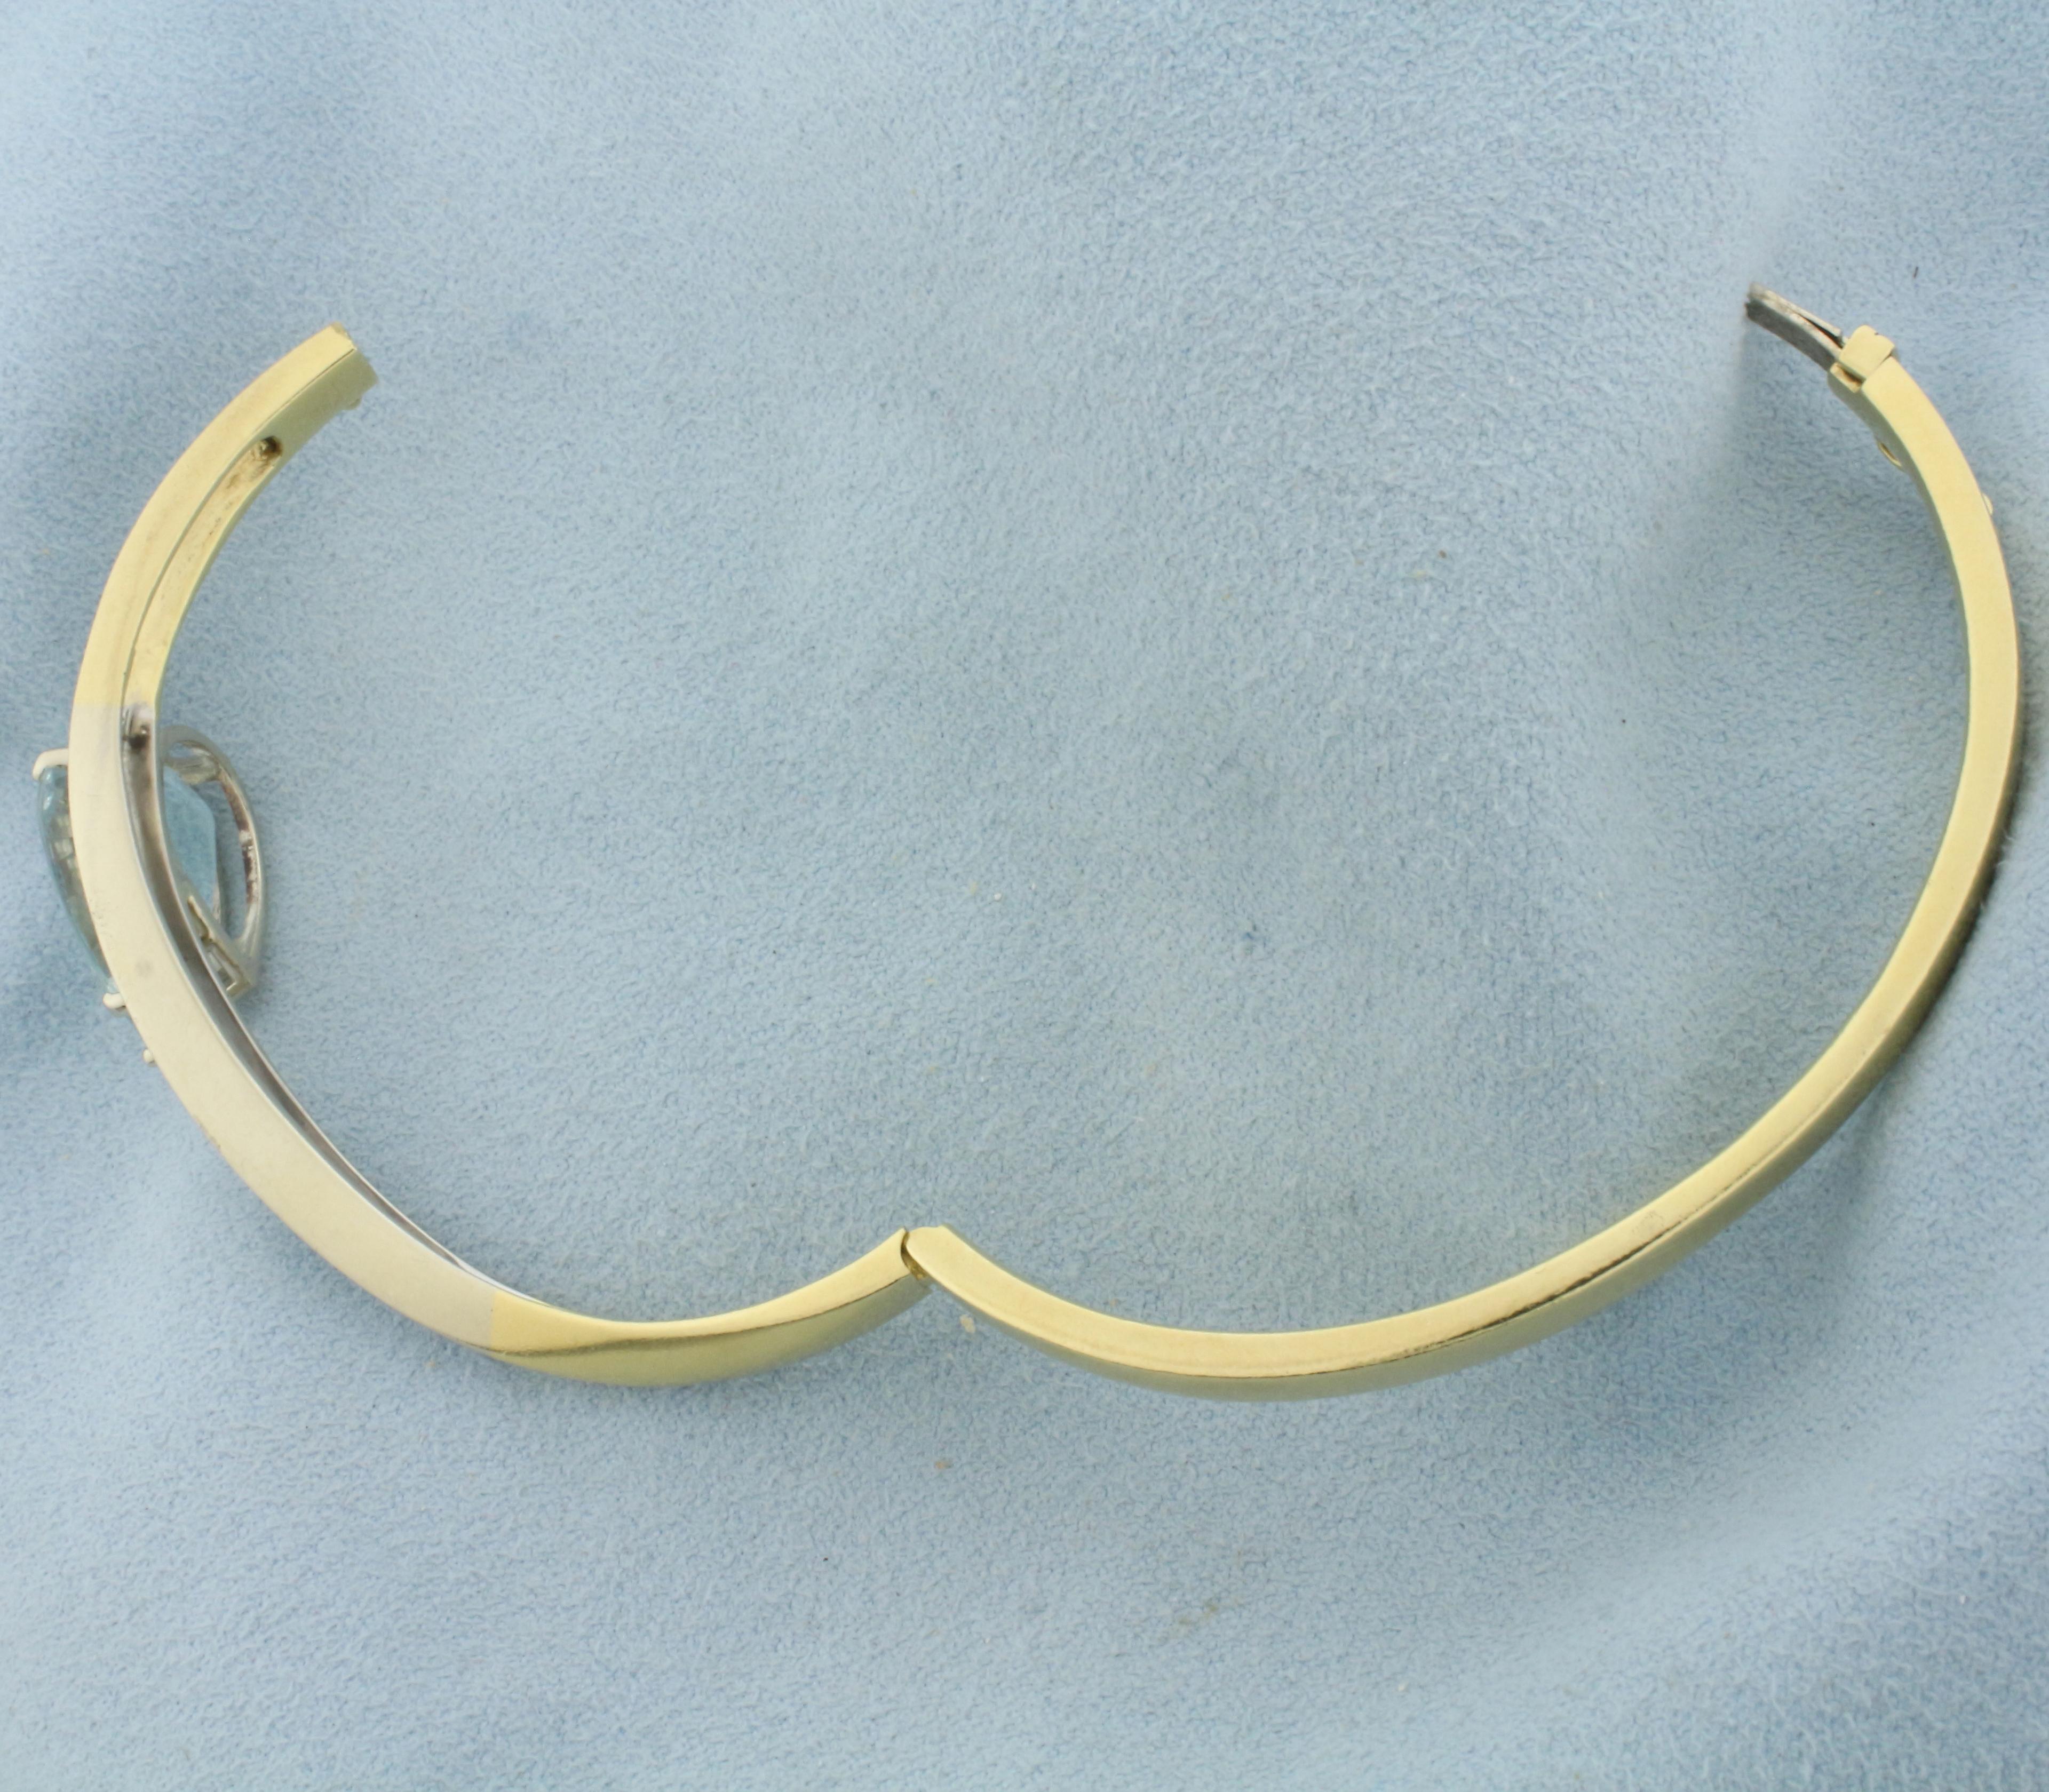 Aquamarine And Diamond Hinged Bangle Bracelet In 18k Yellow Gold